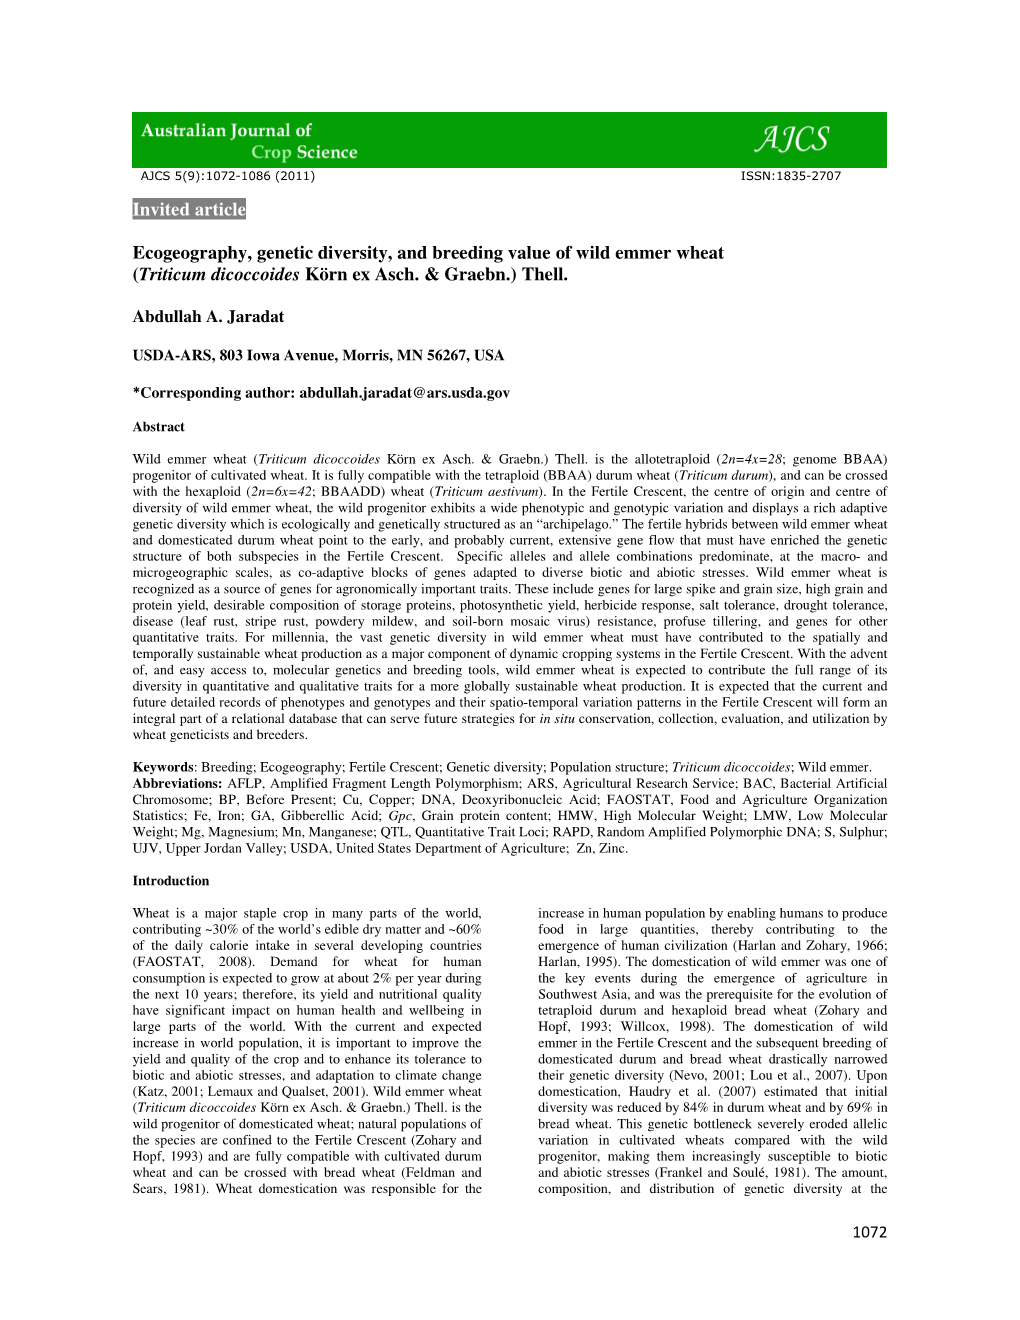 Ecogeography, Genetic Diversity, and Breeding Value of Wild Emmer Wheat (Triticum Dicoccoides Körn Ex Asch